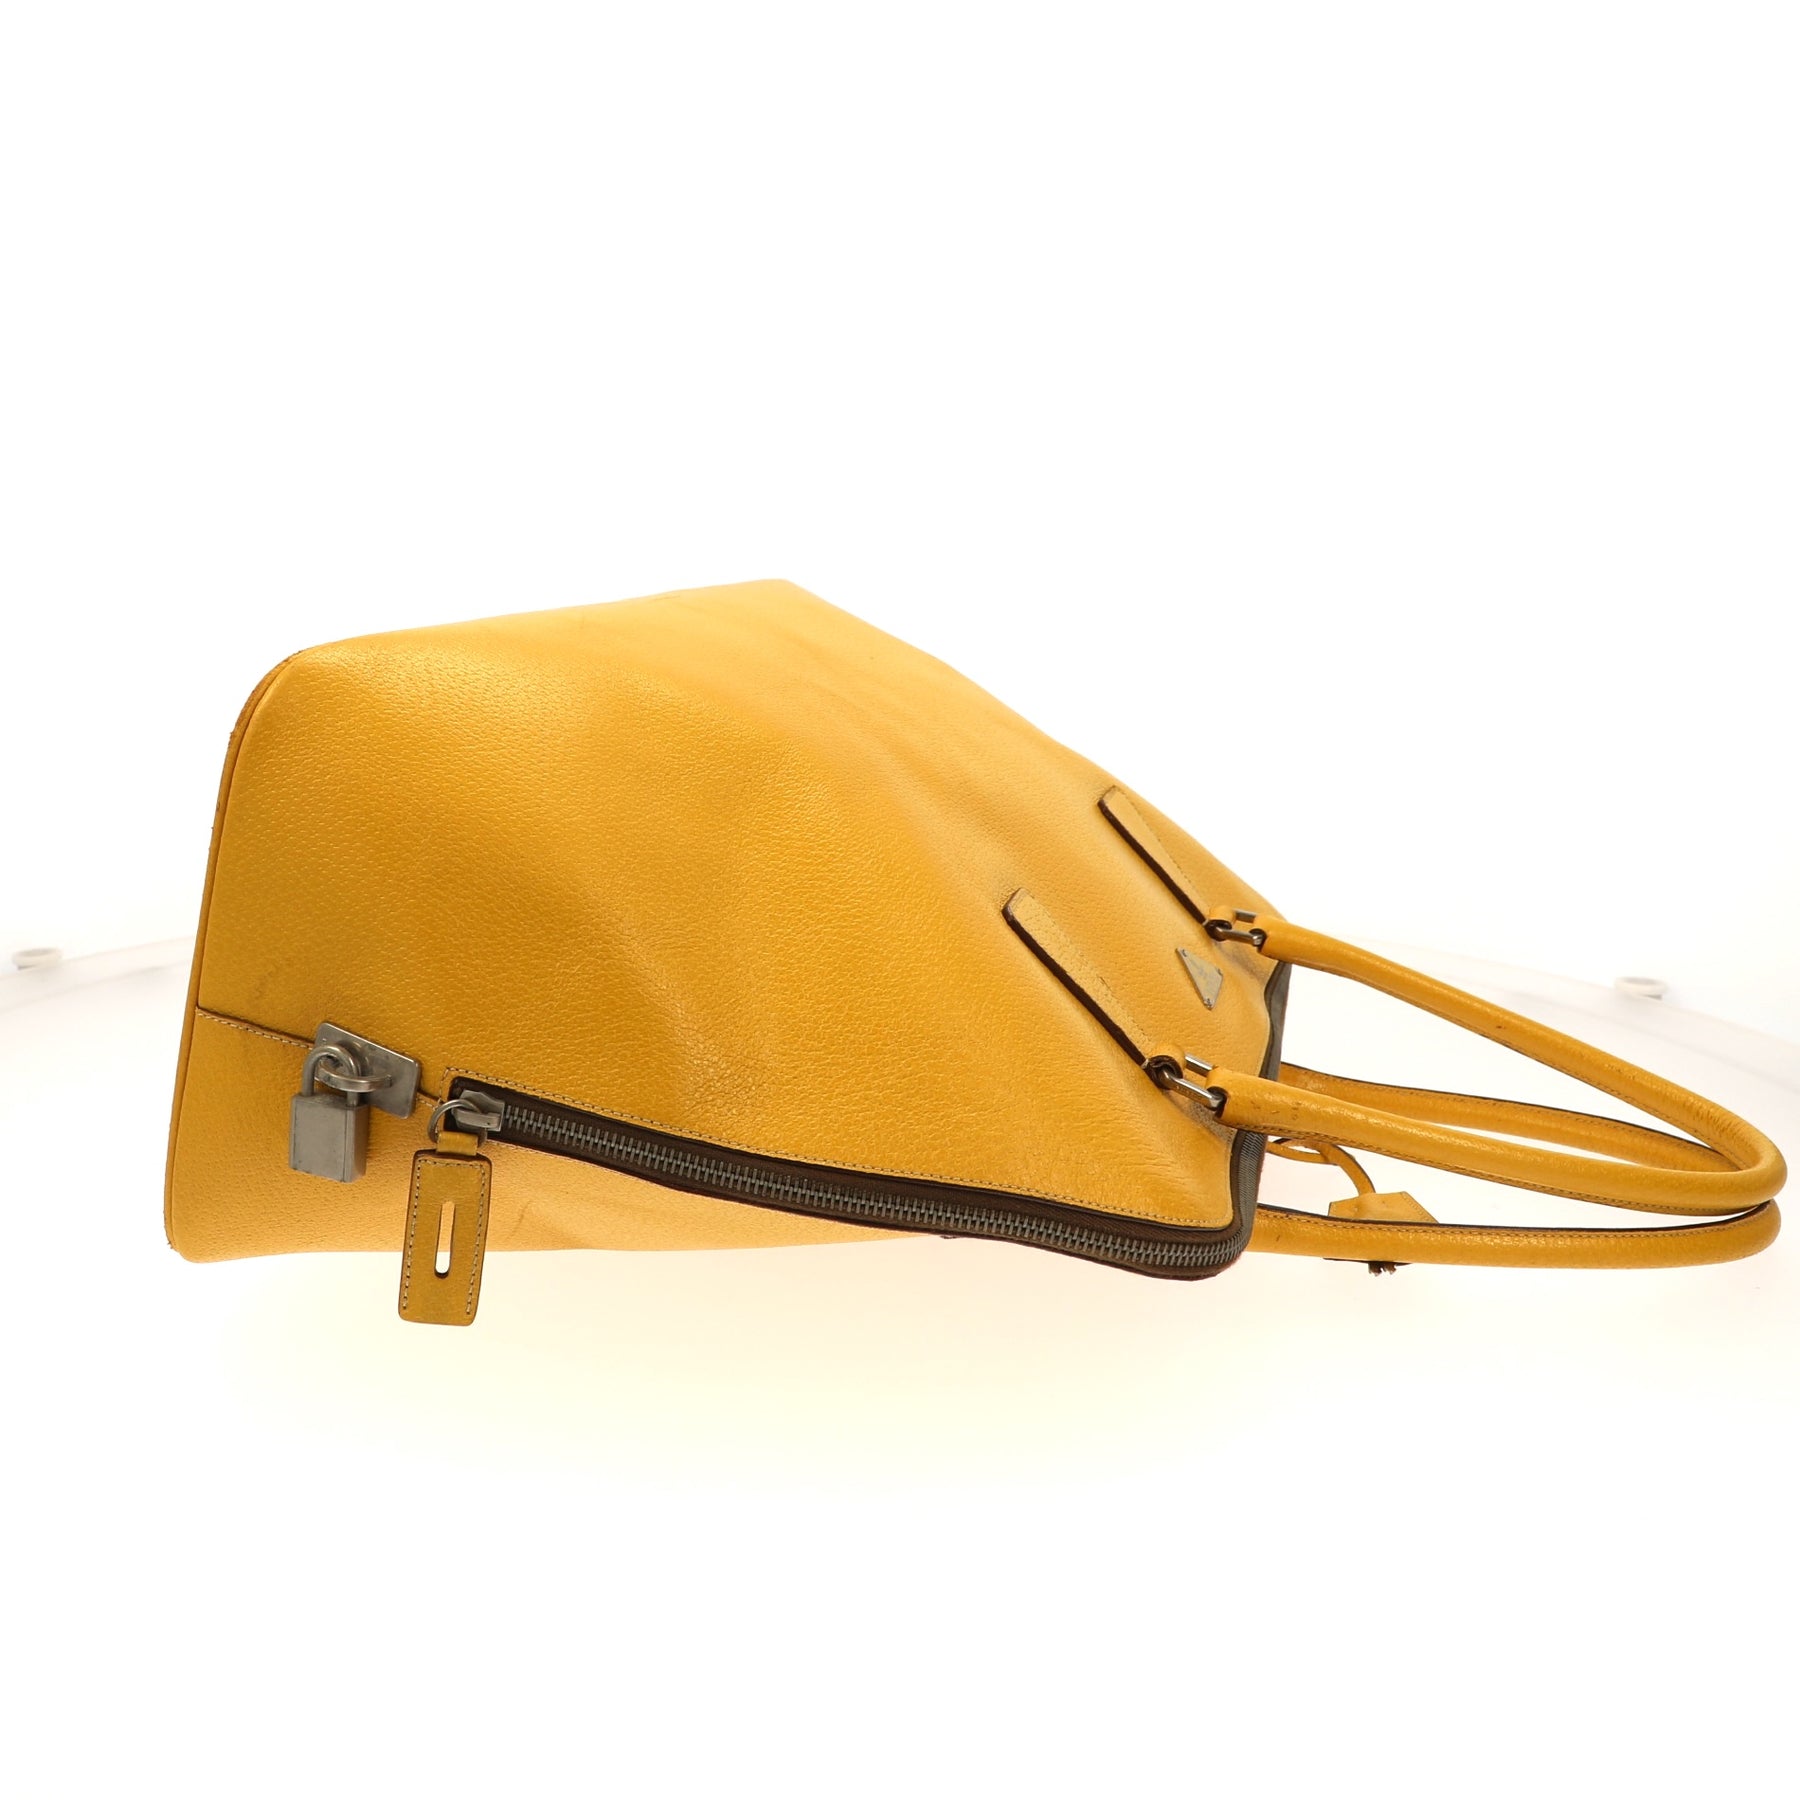 Prada Shoulder Bag in Yellow Leather – Fancy Lux